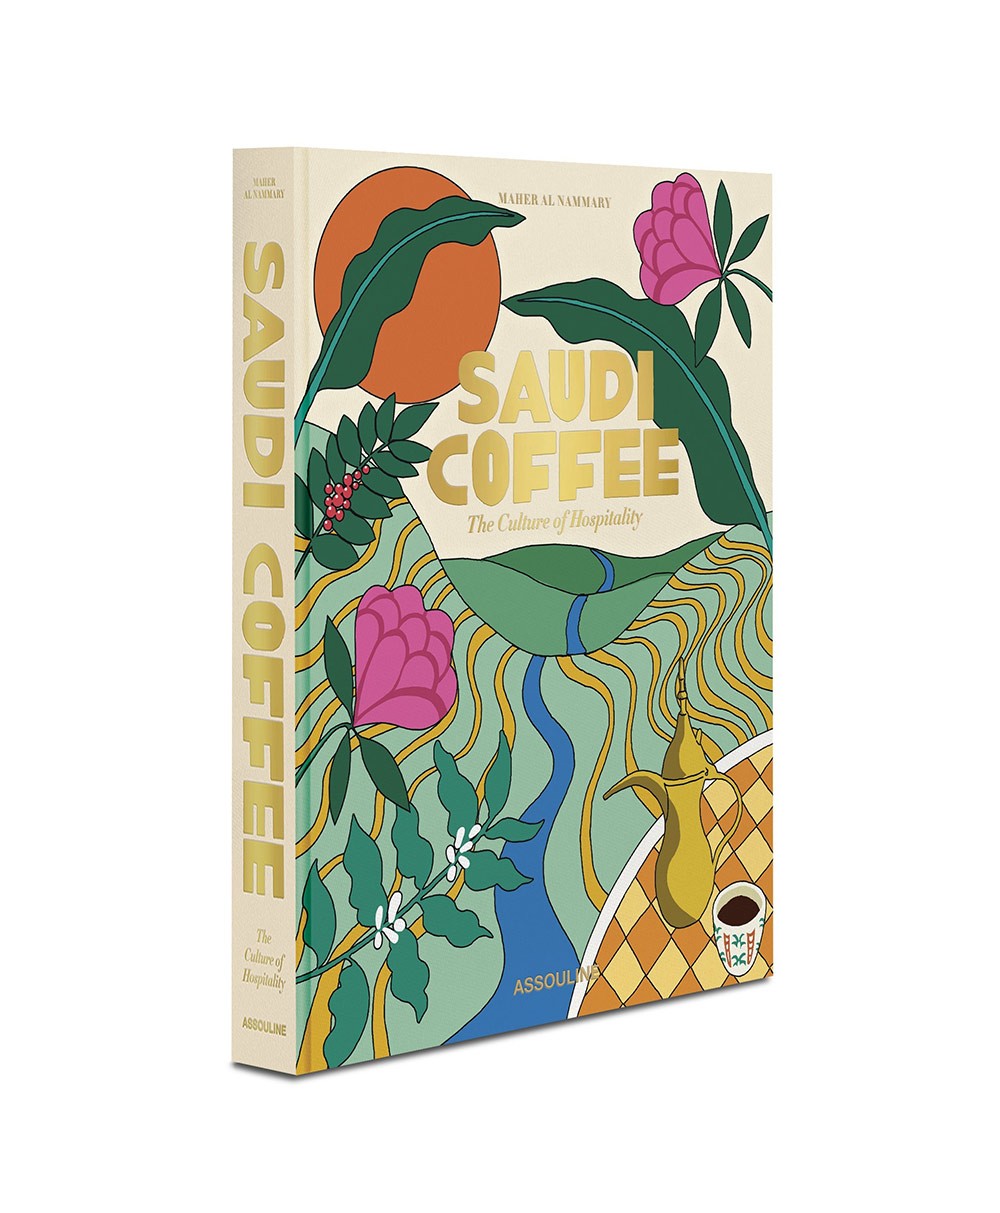 Produktbild des Coffee Table Books „Saudi Coffee: The Culture of Hospitality“ von Assouline im RAUM concept store 